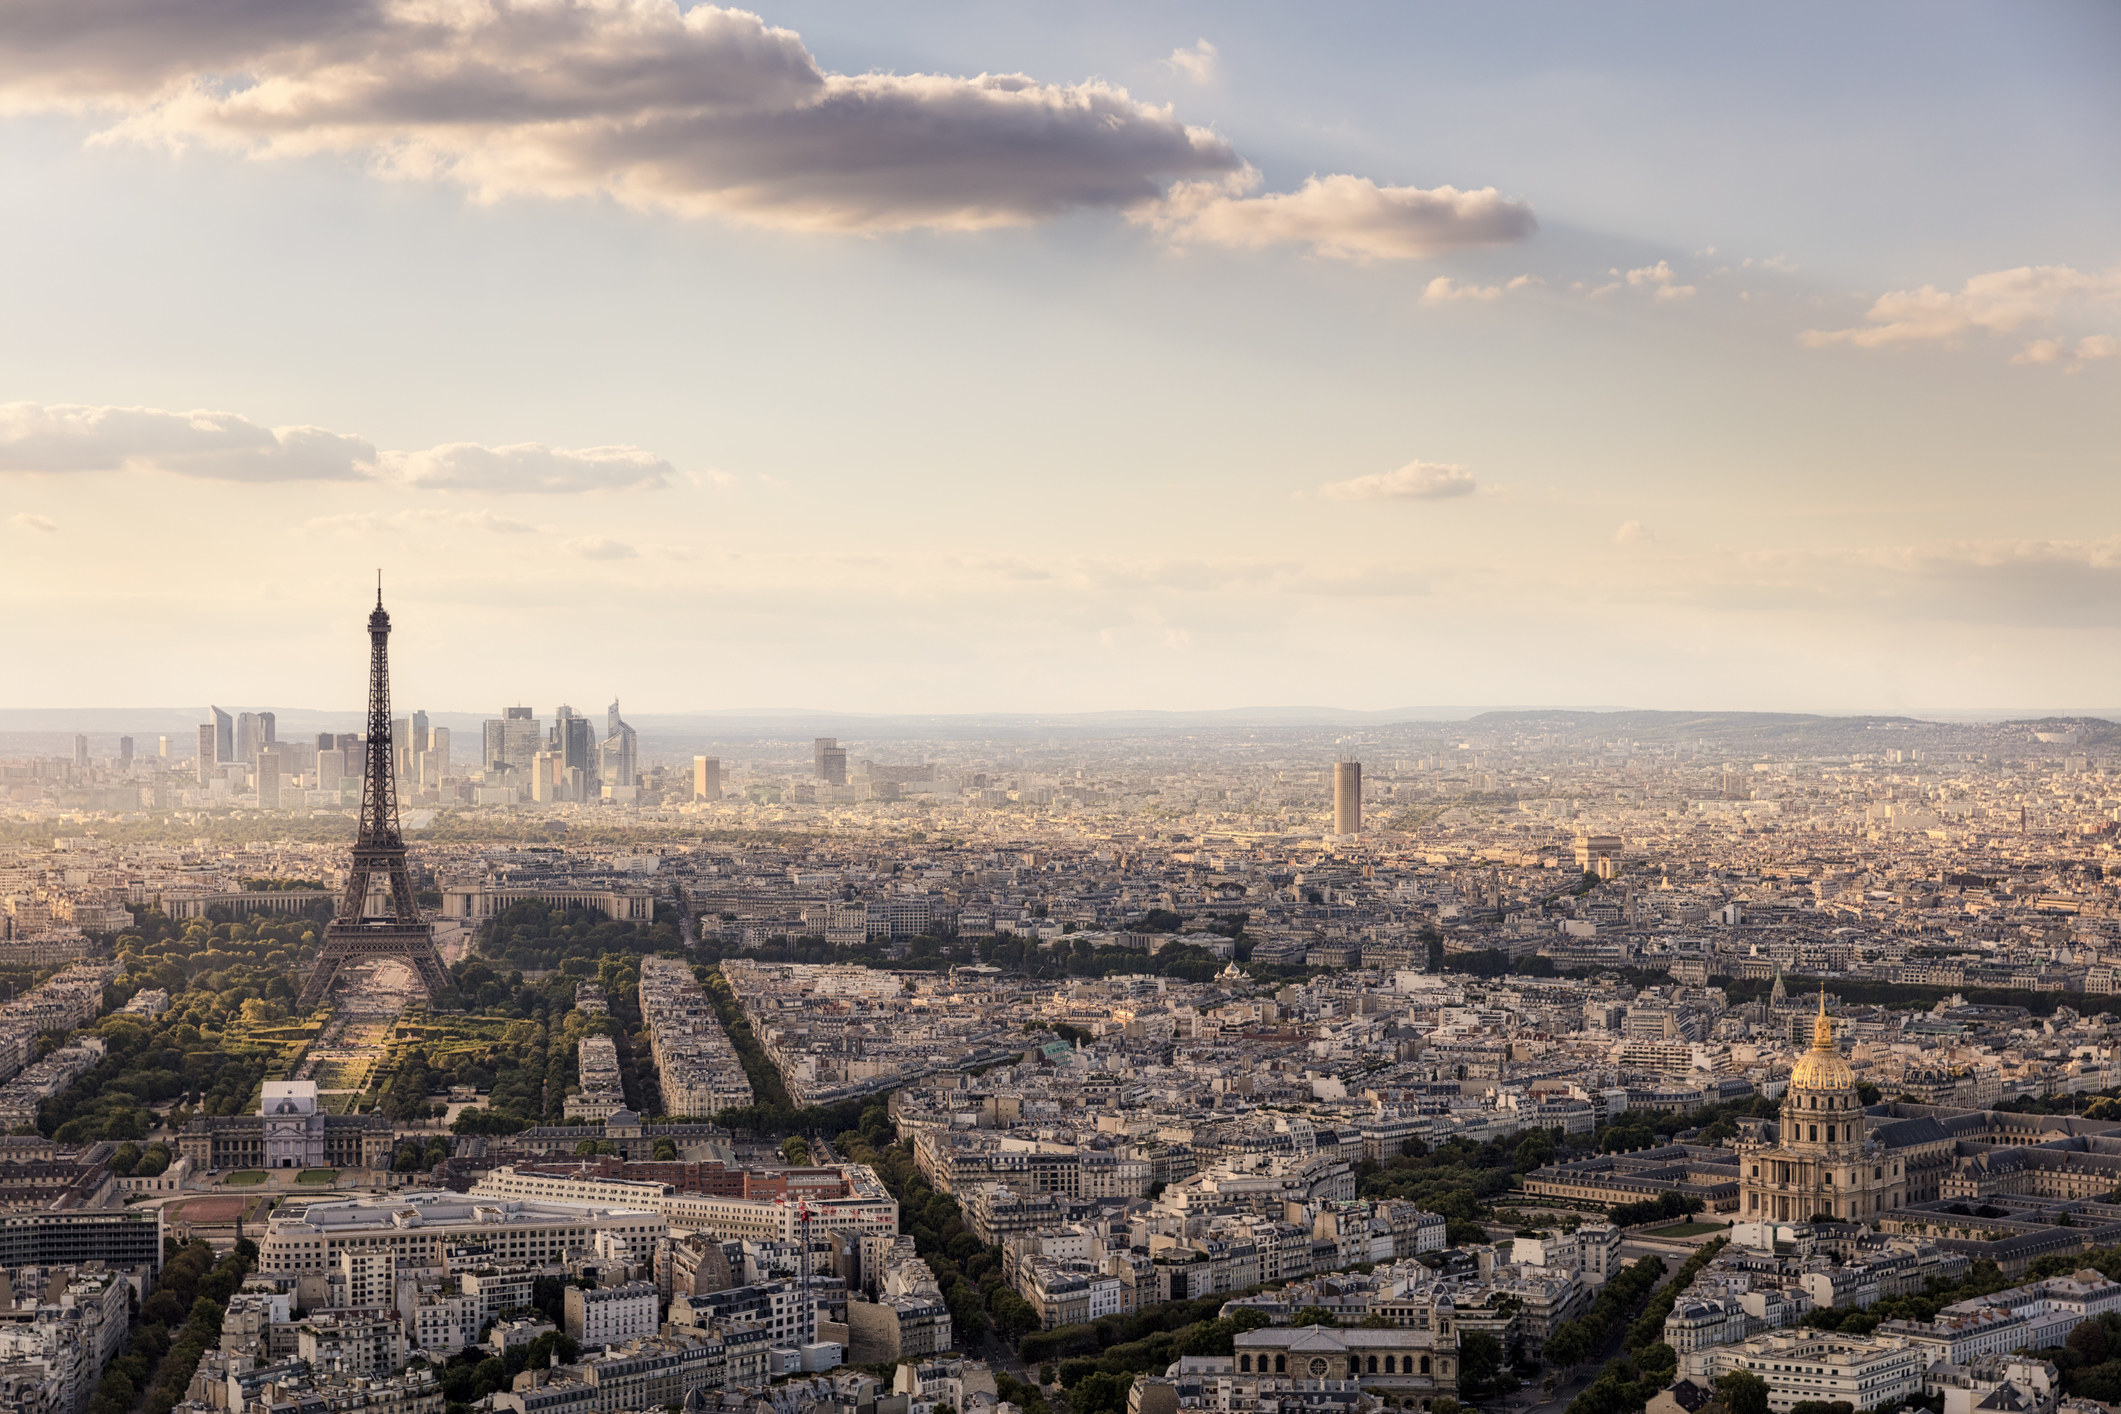 Cityscape of Paris showing the Eiffel Tower